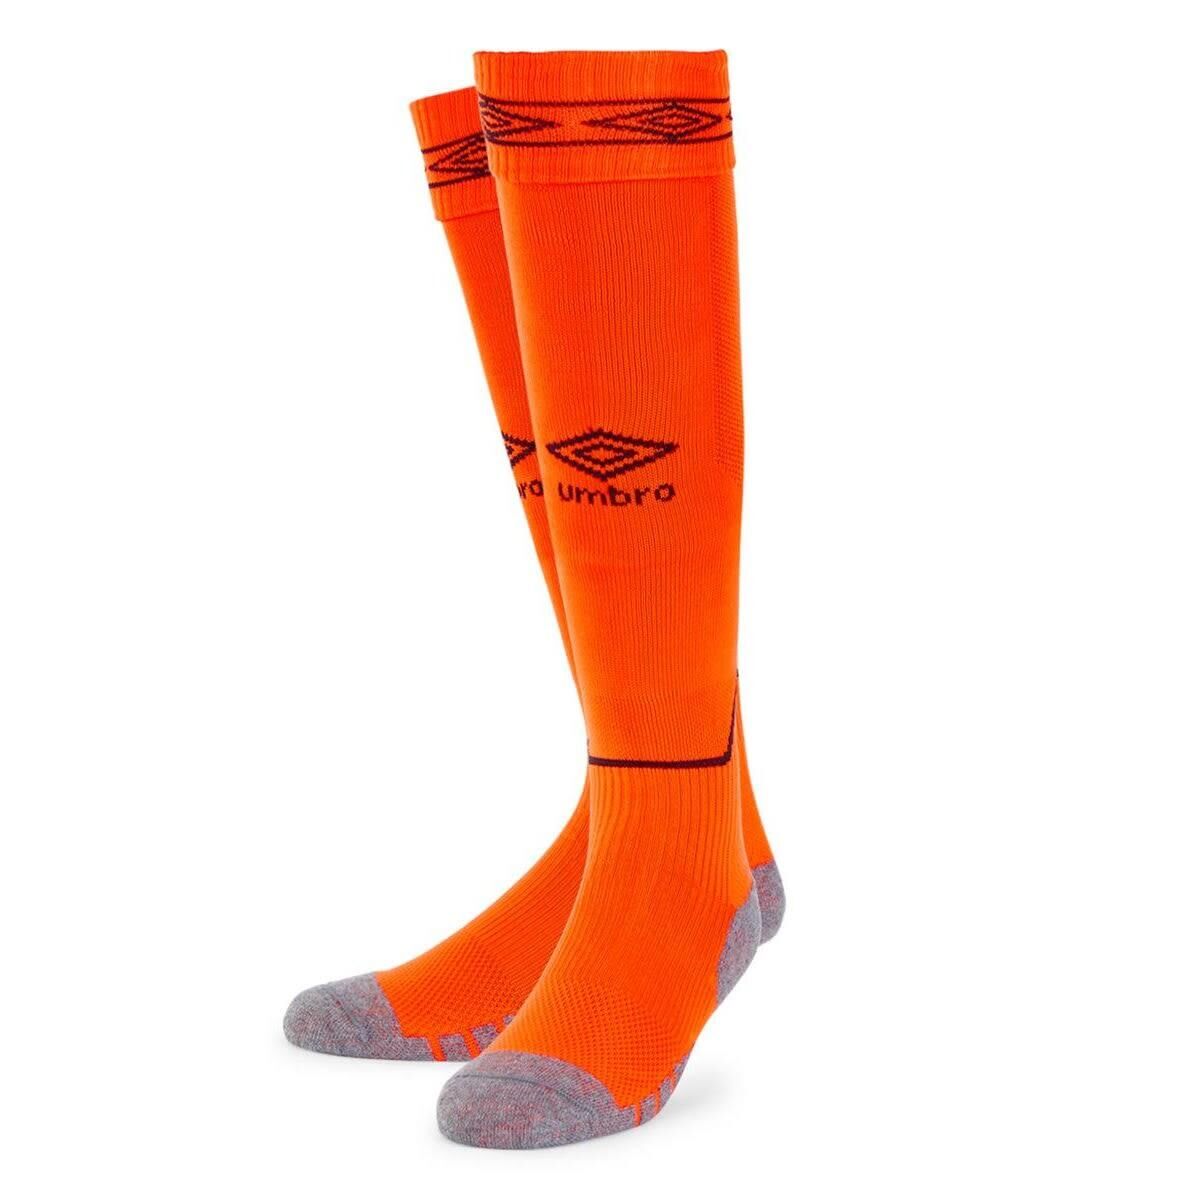 UMBRO Childrens/Kids Diamond Football Socks (Shocking Orange/Black)